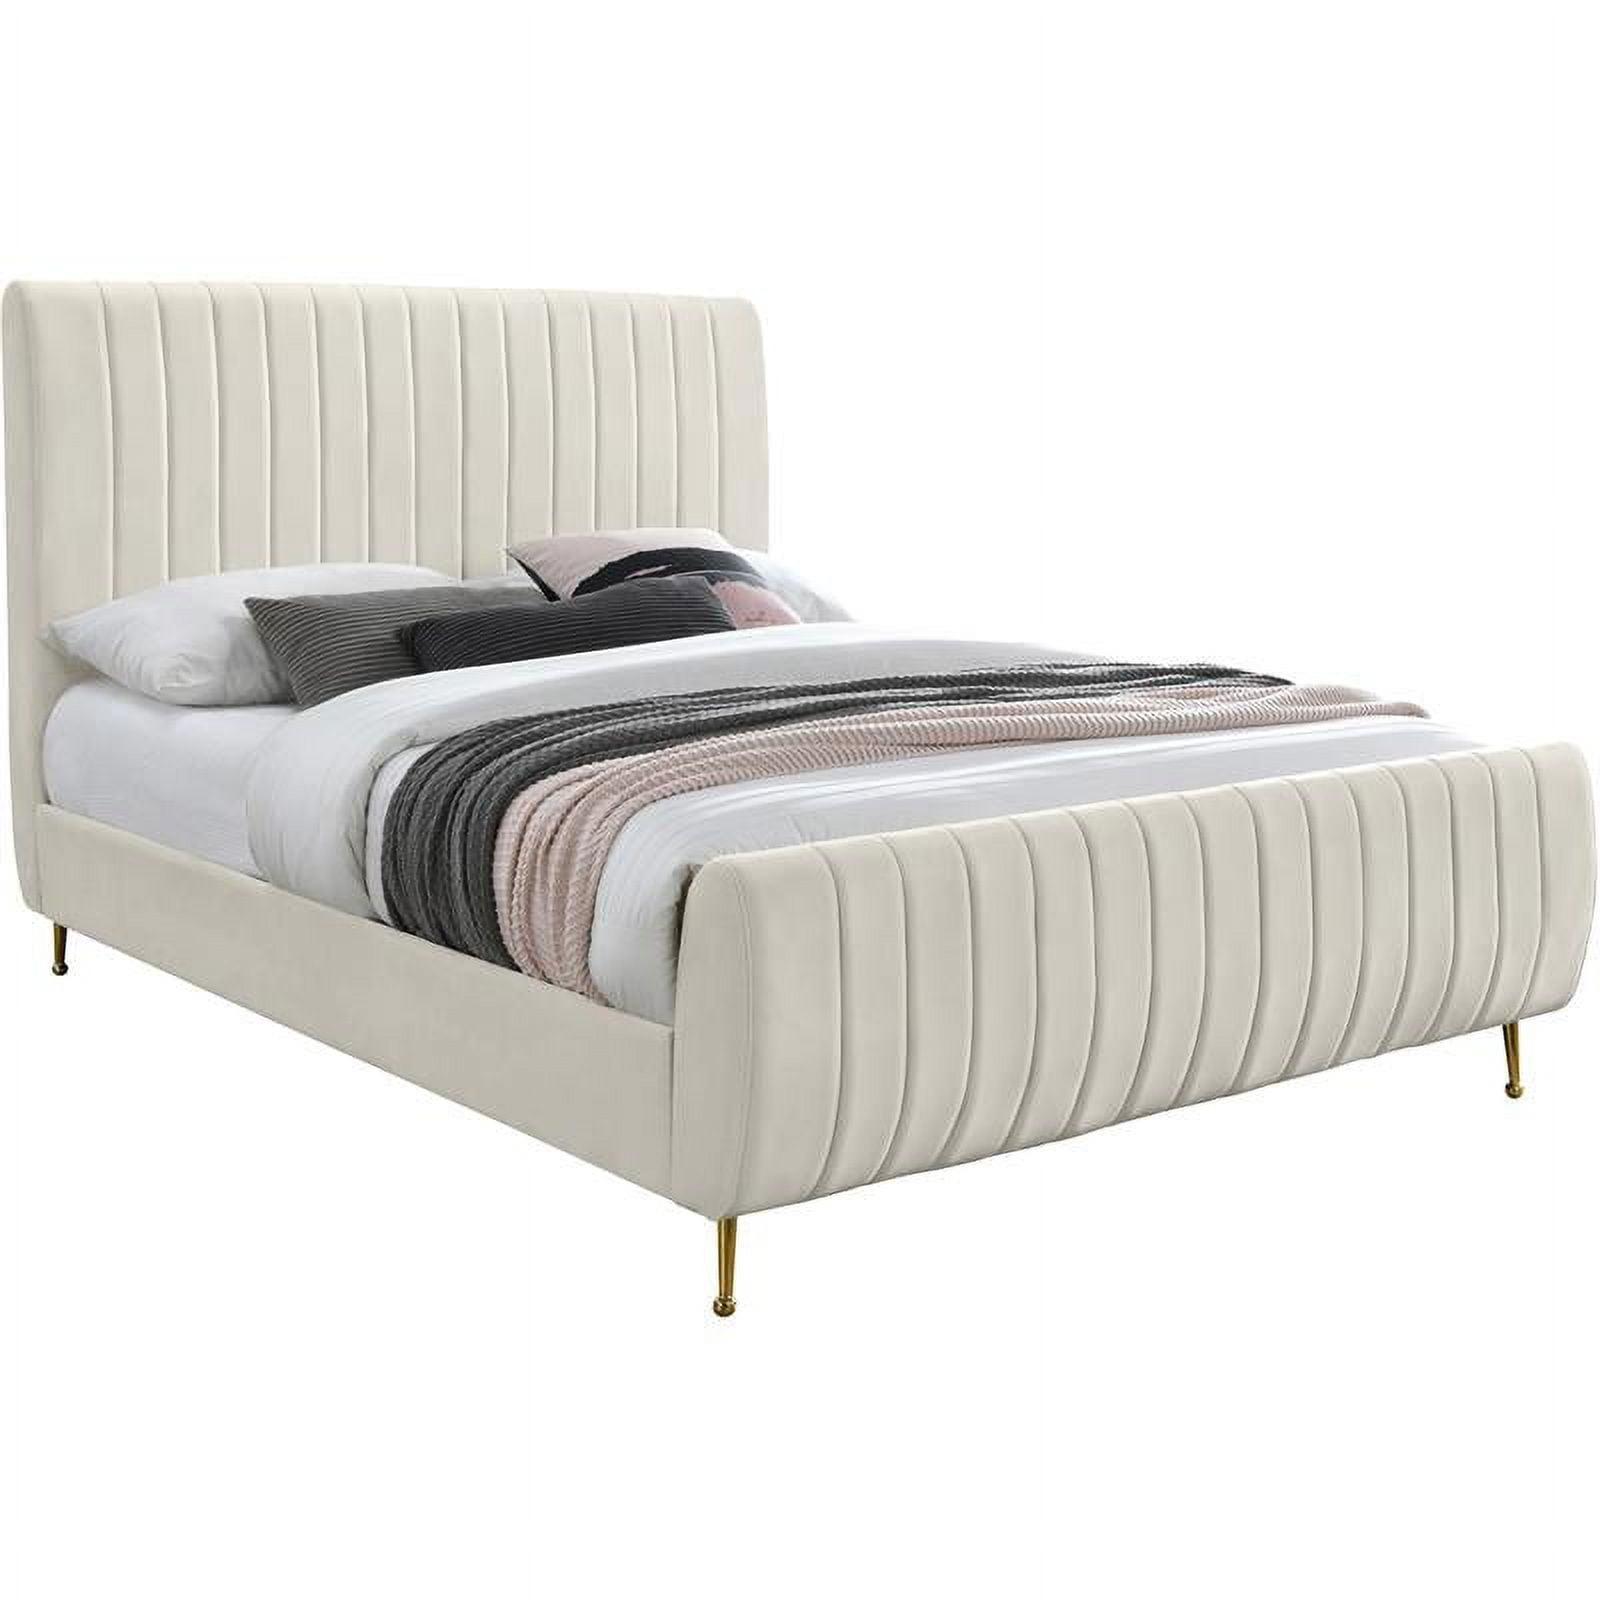 Cream Velvet Upholstered Queen Bed with Gold Legs